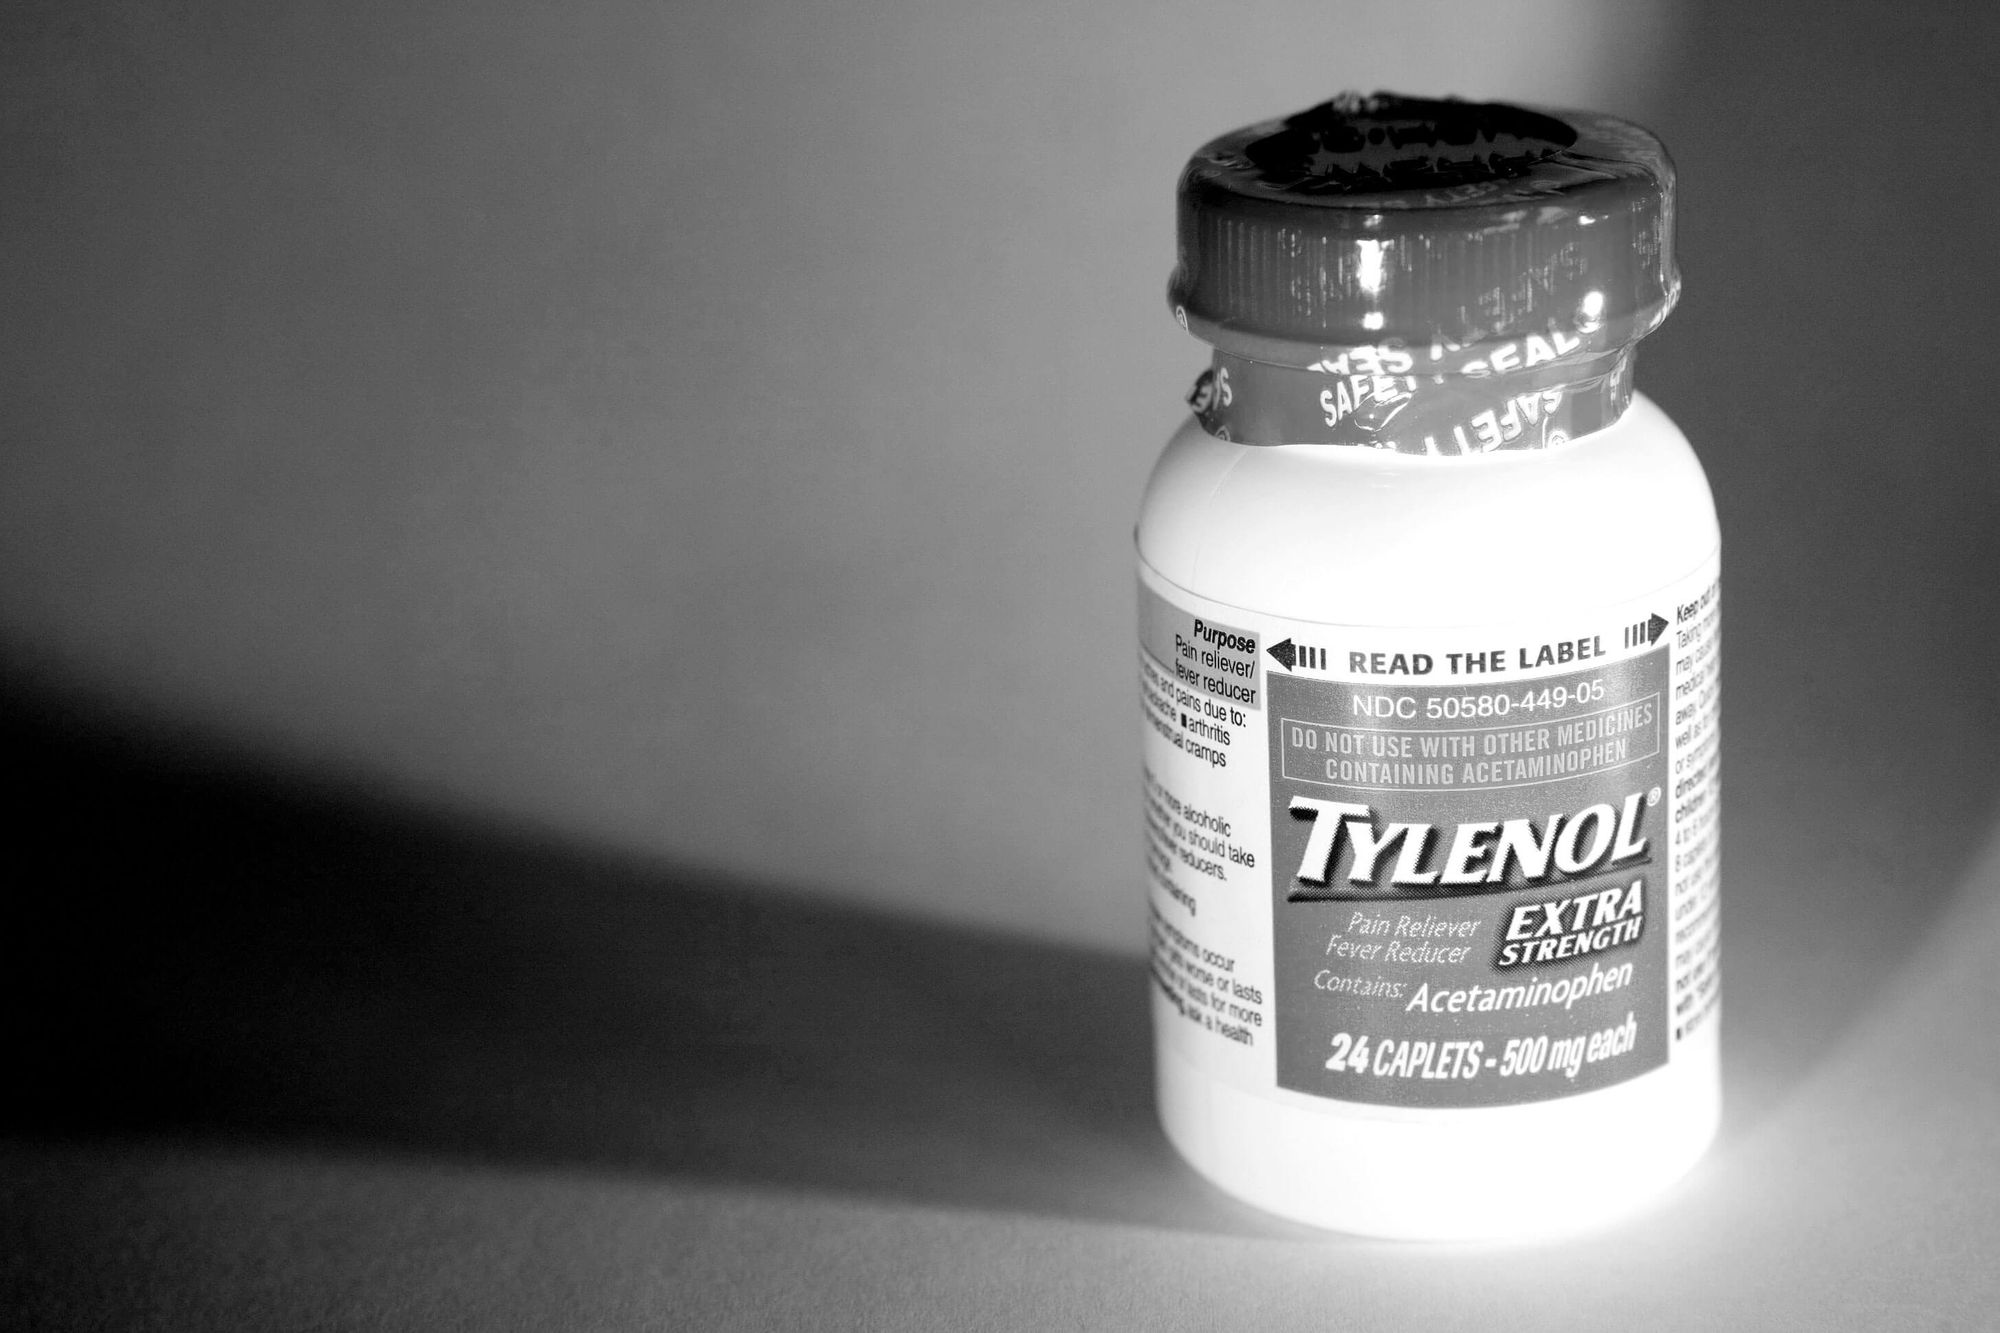 A bottle of Tylenol on a dark background.